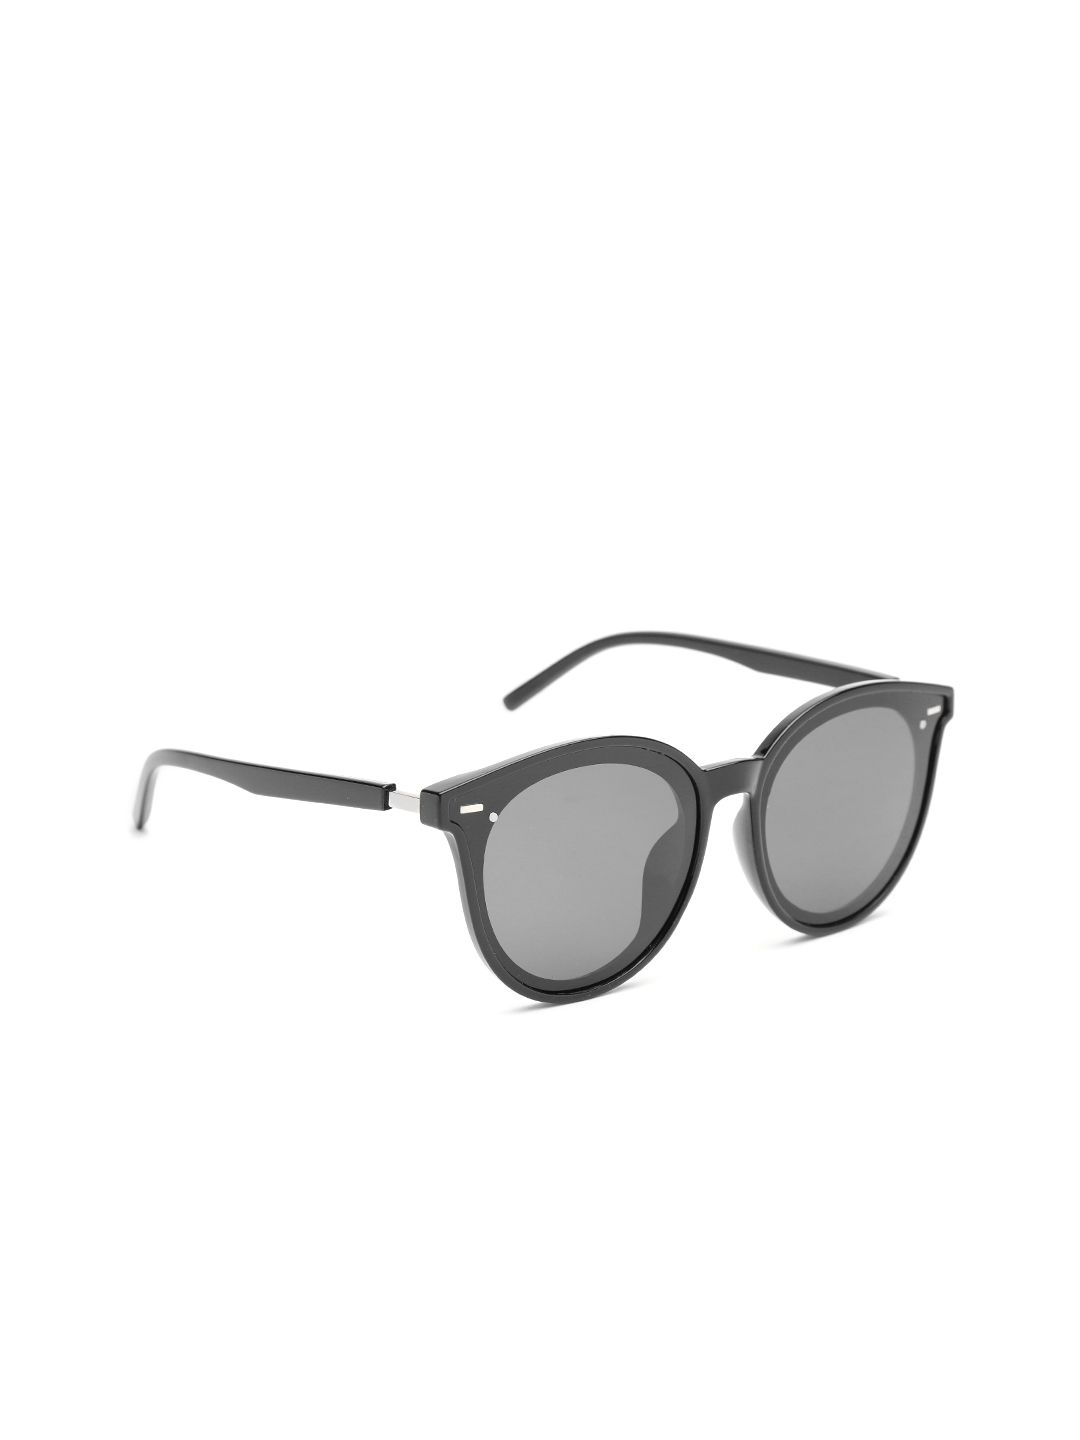 Carlton London Women Polarised Oval Sunglasses 3793-C1 Price in India